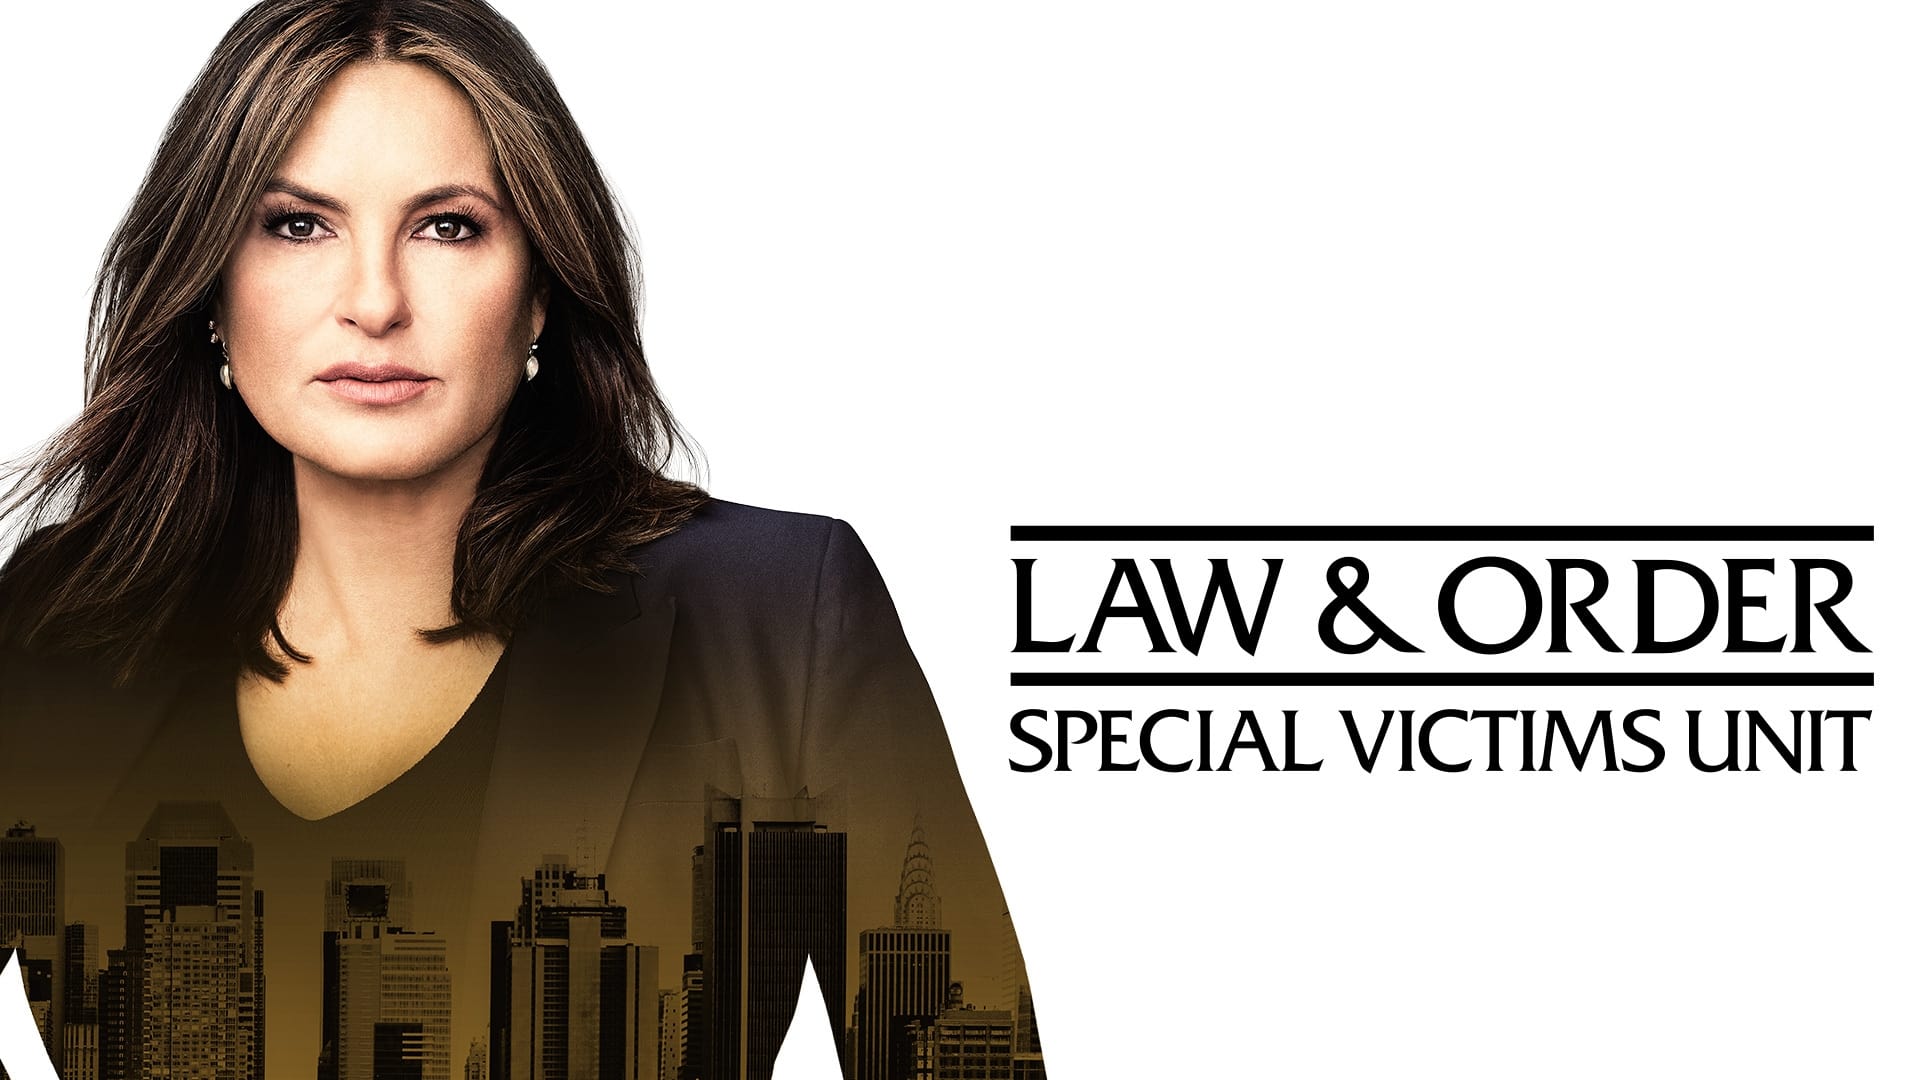 Law & Order: Special Victims Unit - Season 6